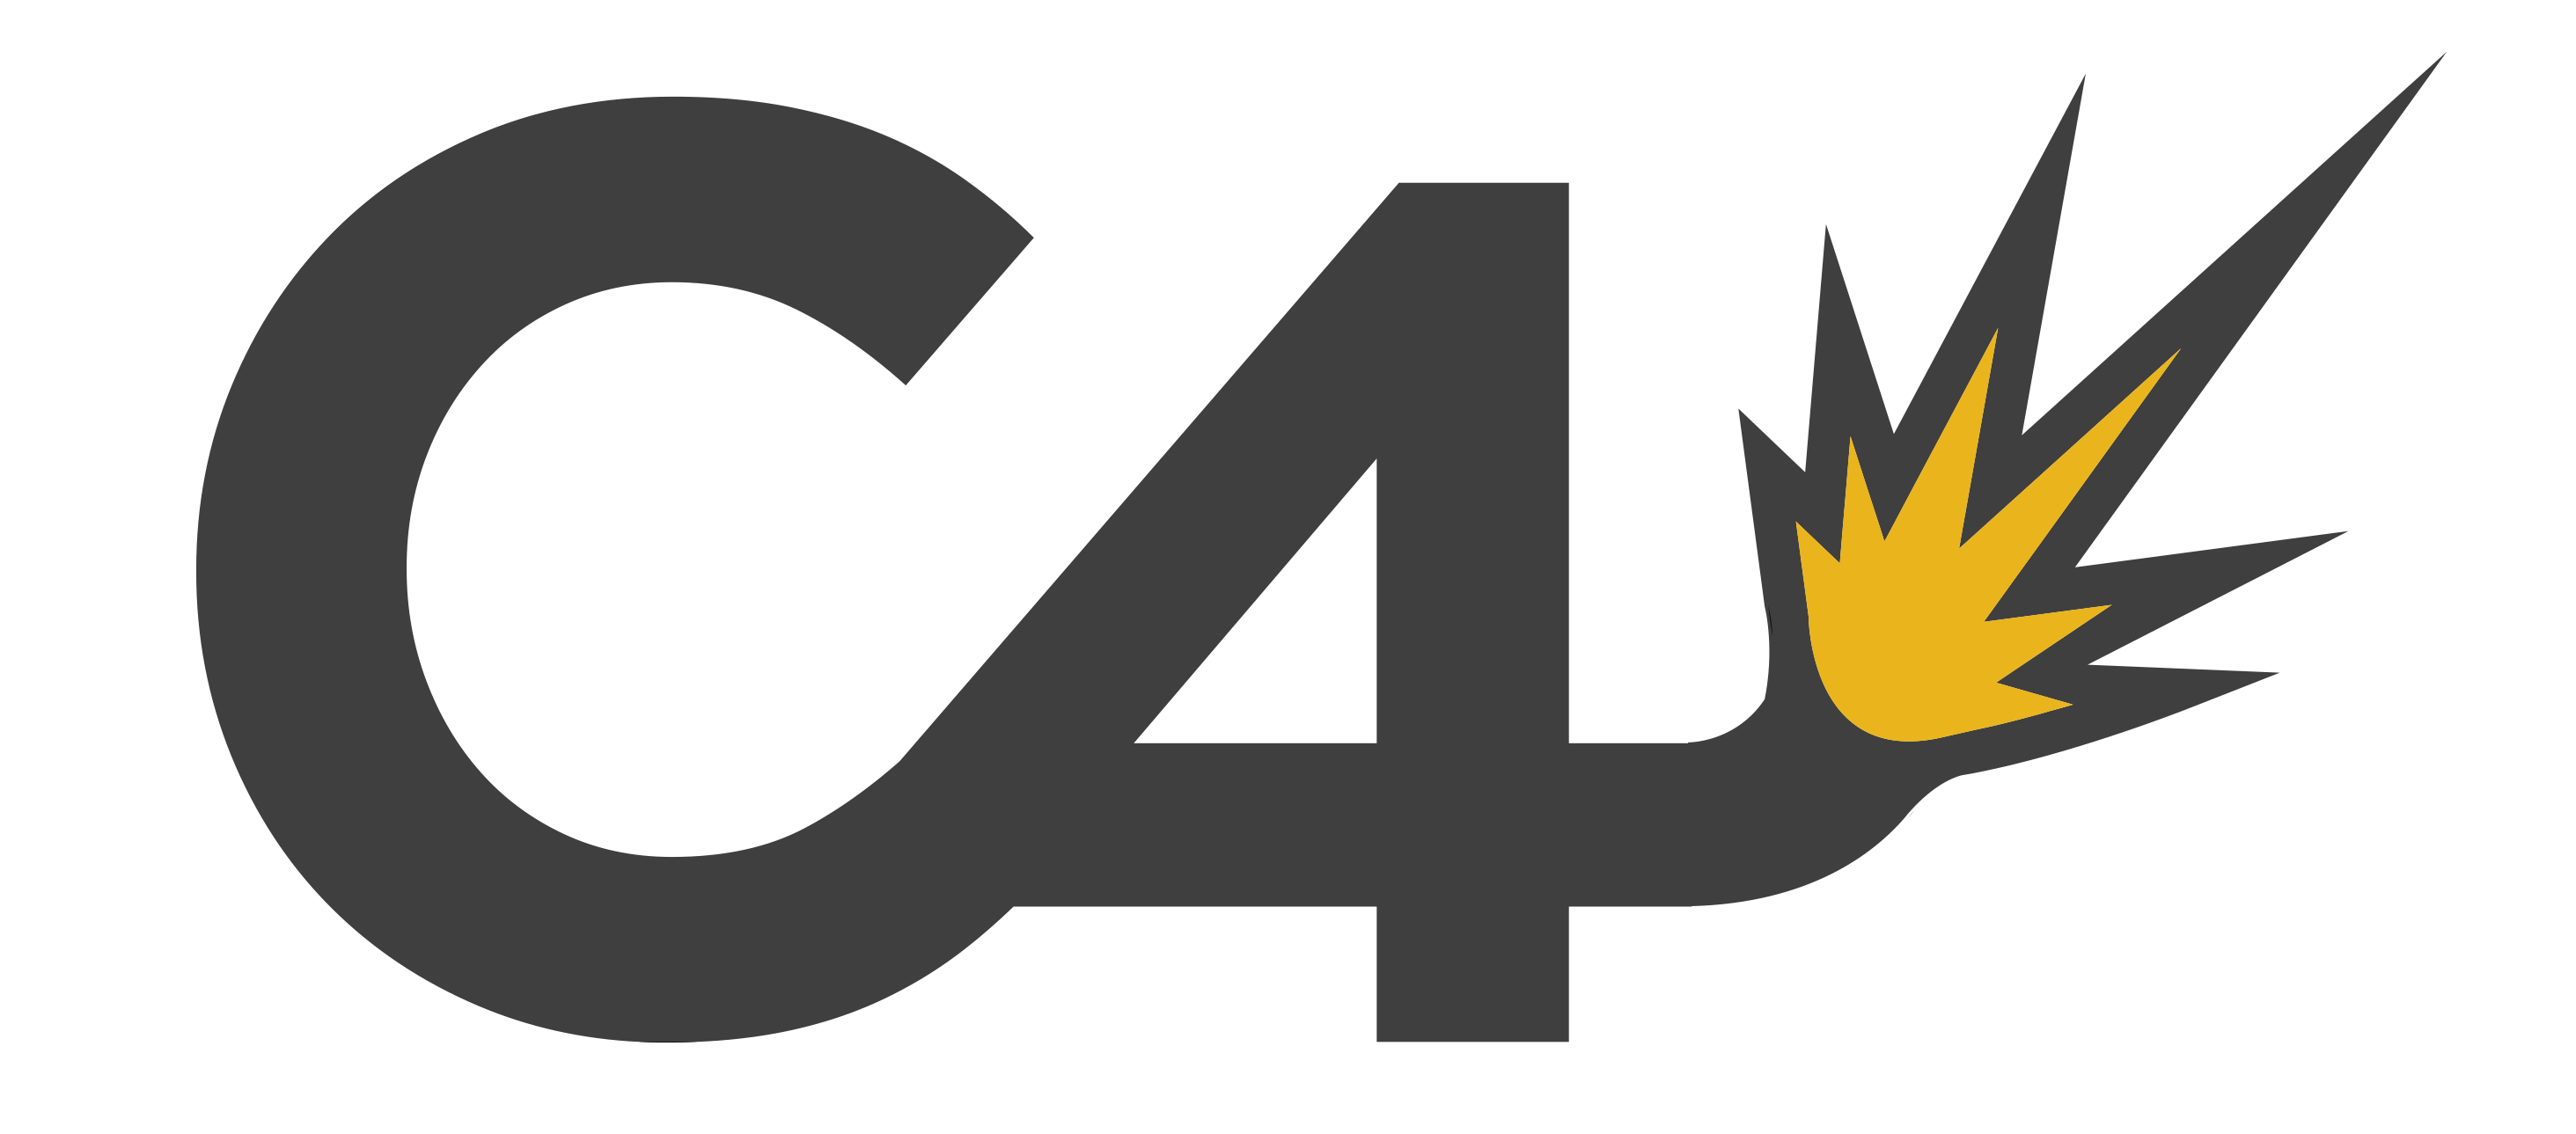 C4 Logo - C4 Productions & VFX